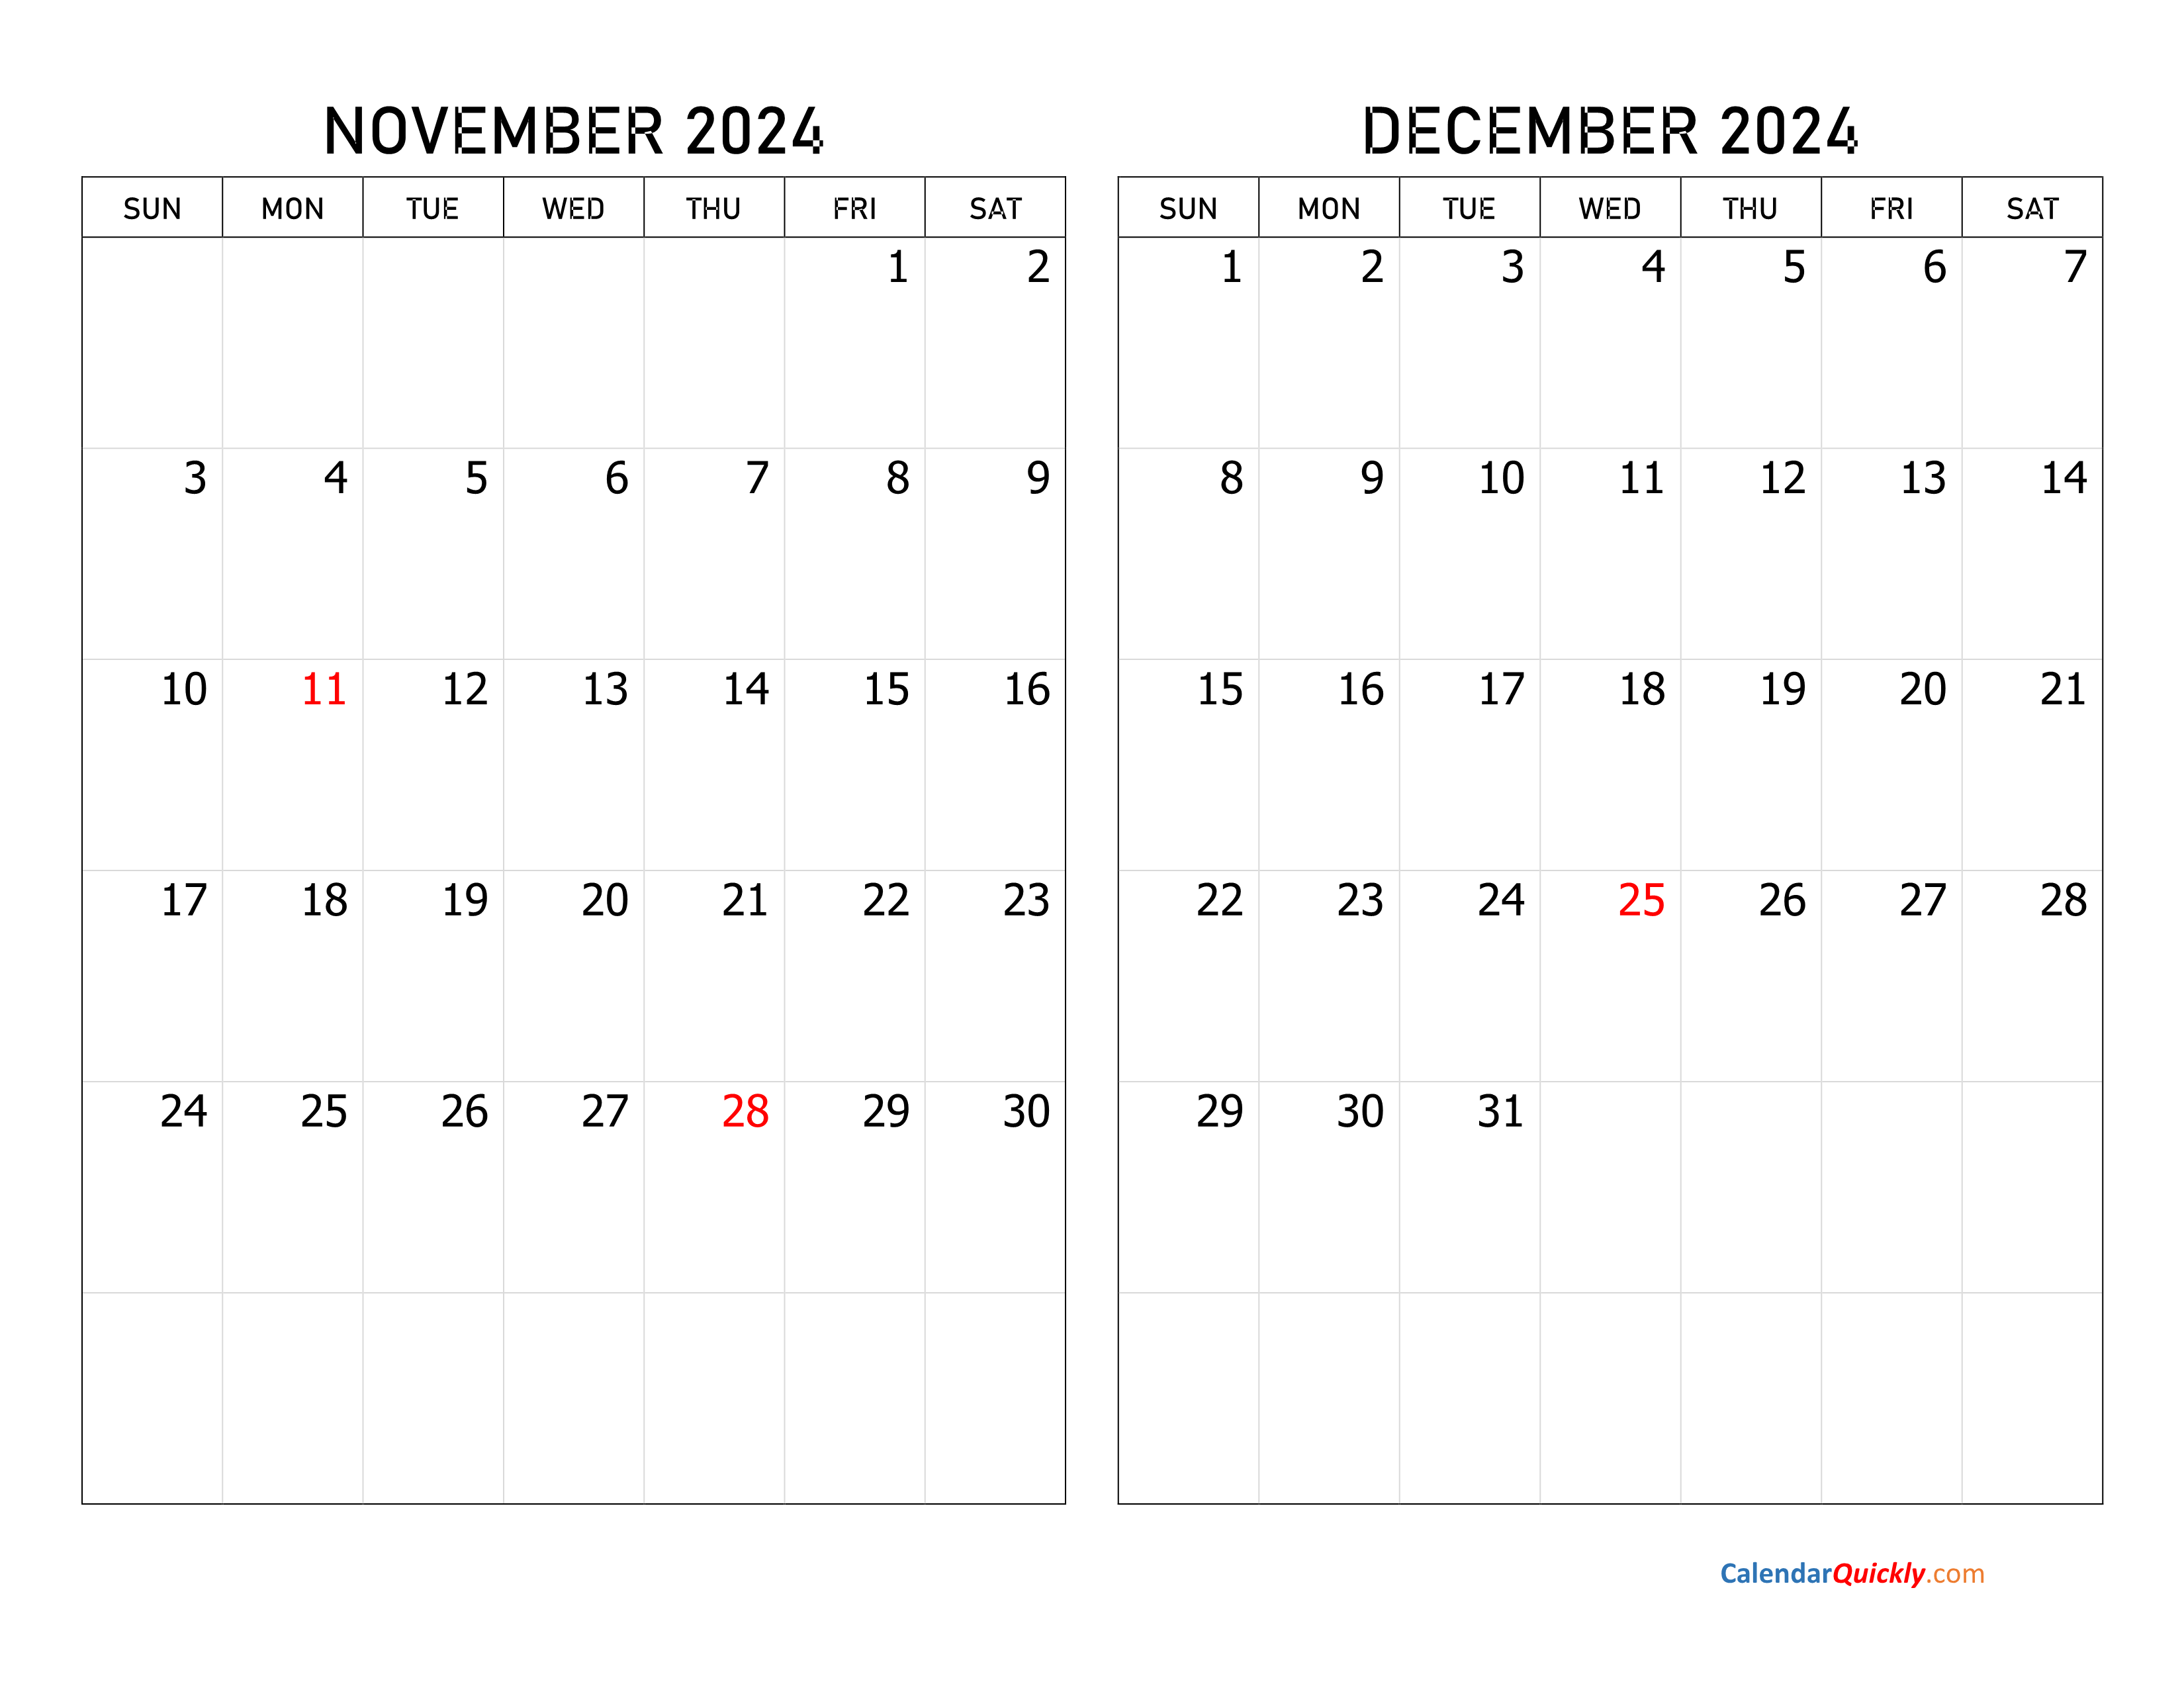 Free Printable 2024 November And December Calendar 2024 CALENDAR - Free Printable 2024 Calendar November 24calendars